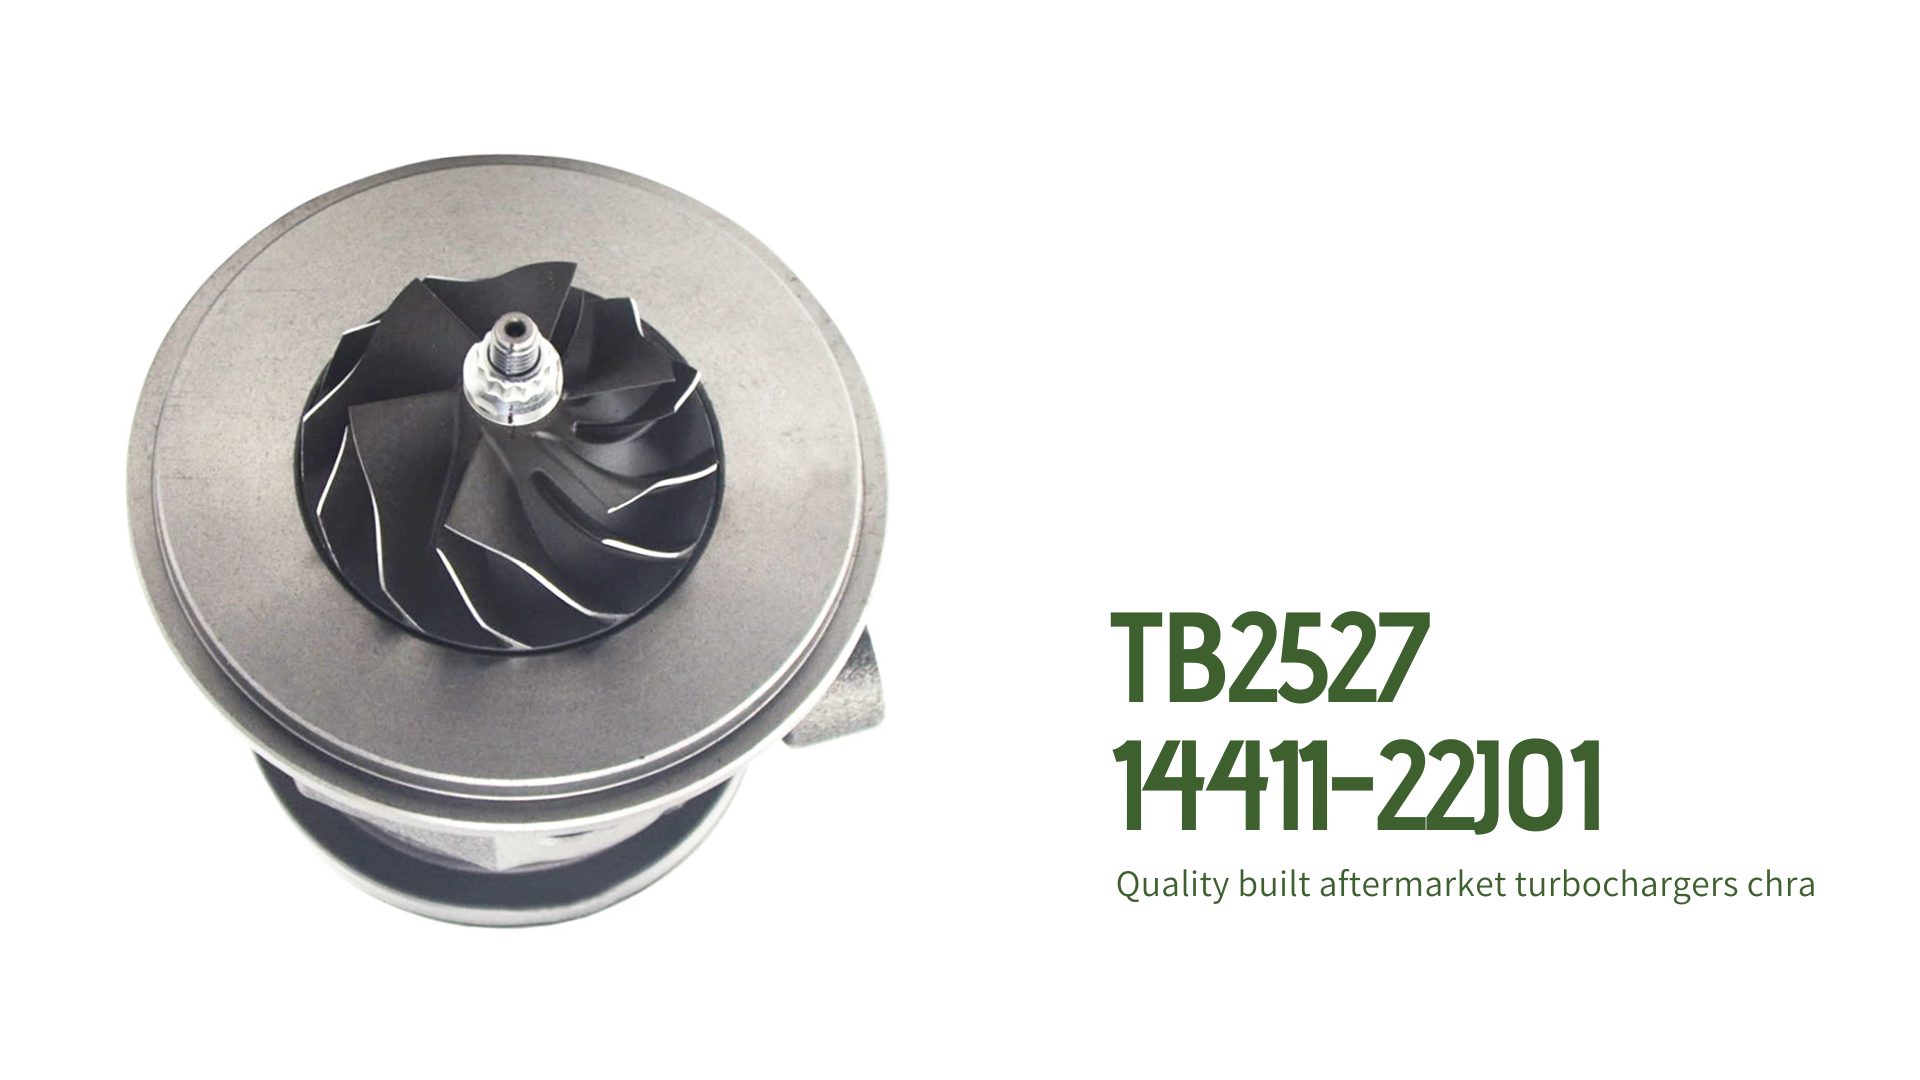 465941 Cartridge For TB2527 14411-22J01 Turbocharger